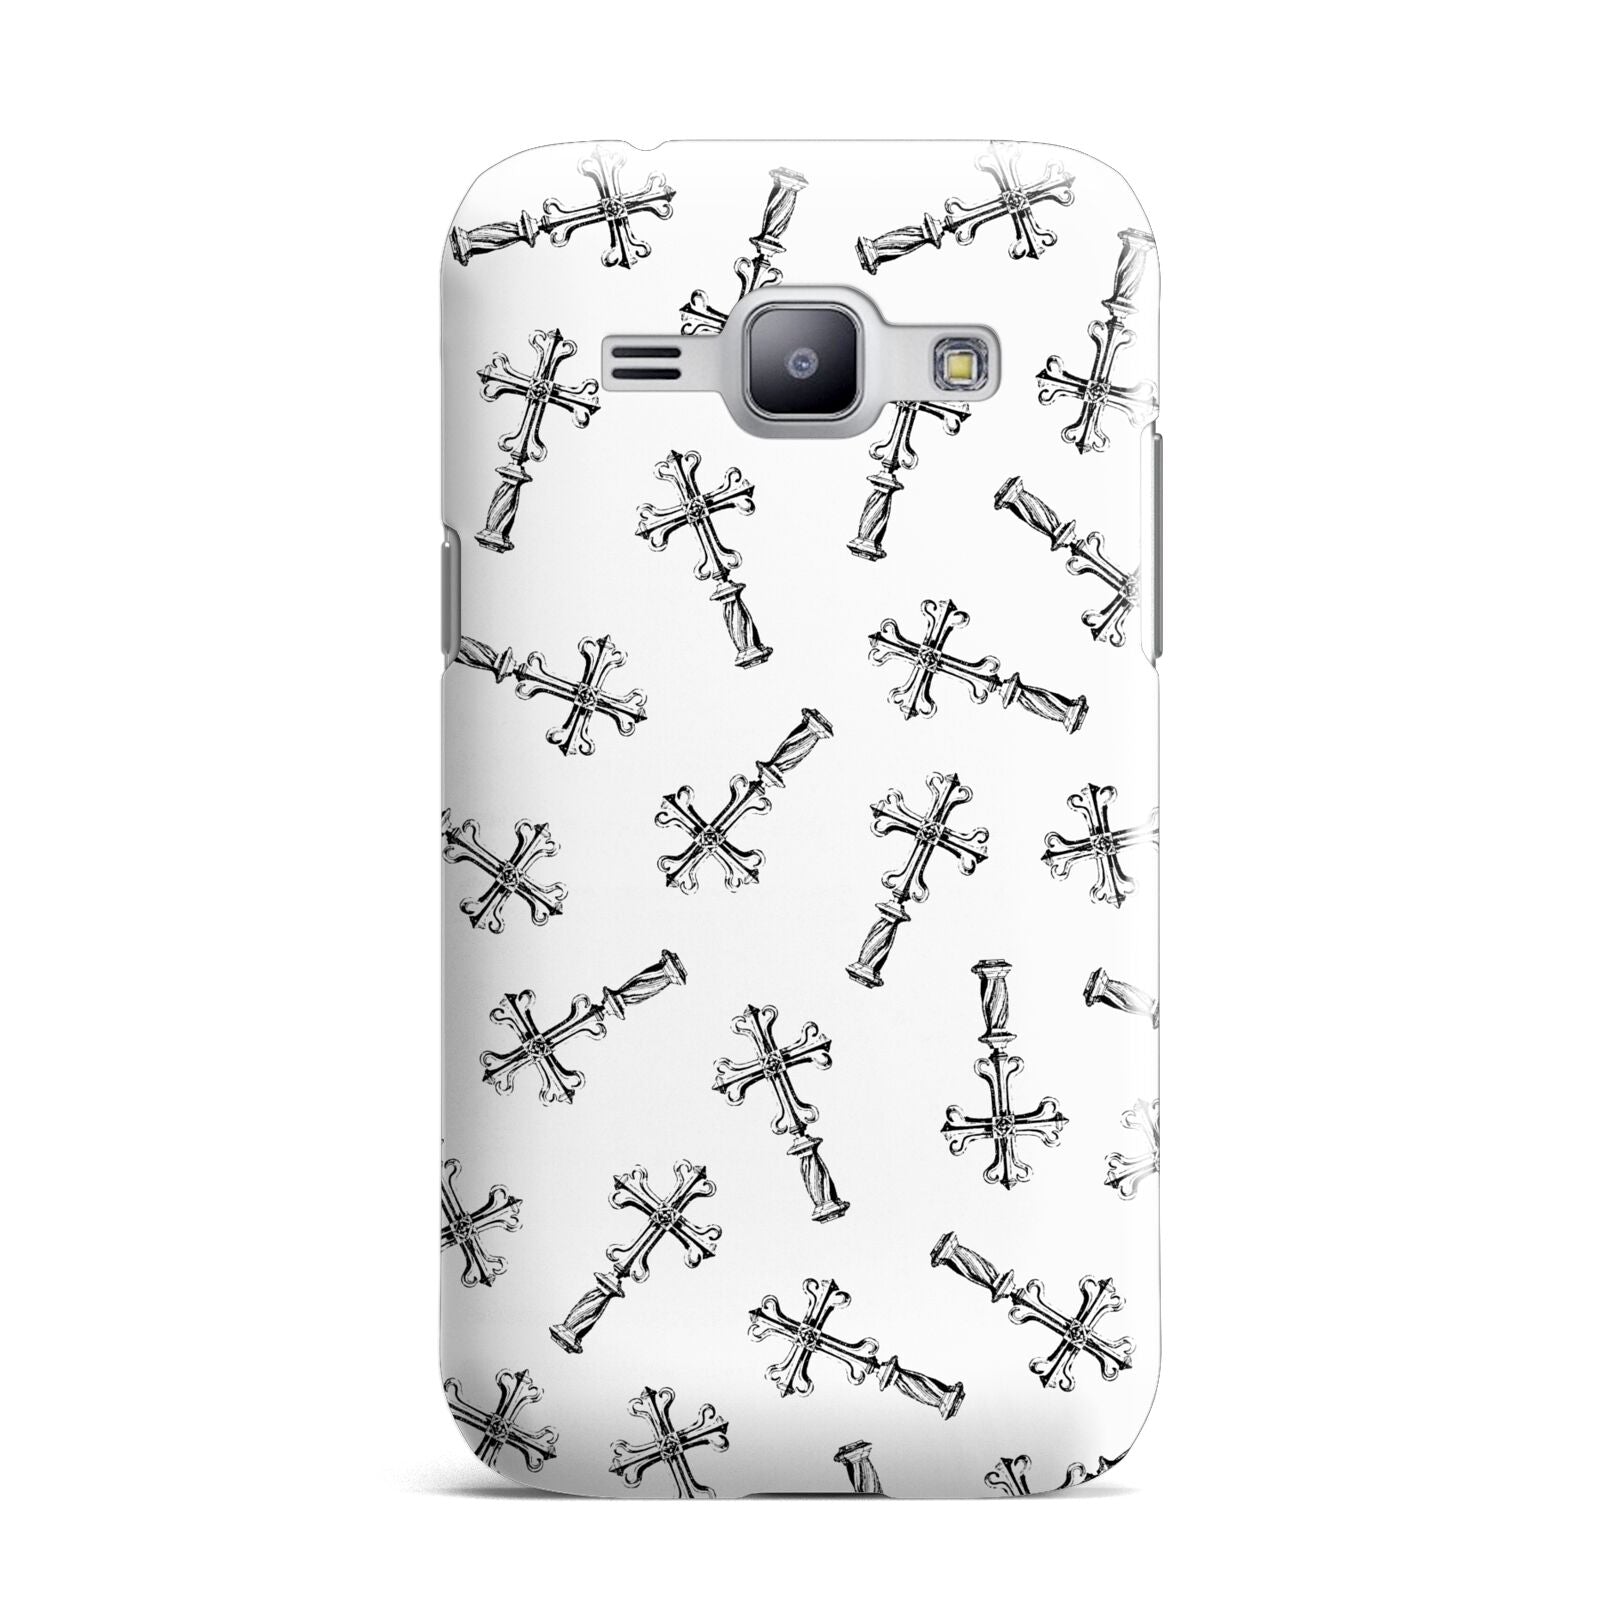 Monochrome Crosses Samsung Galaxy J1 2015 Case